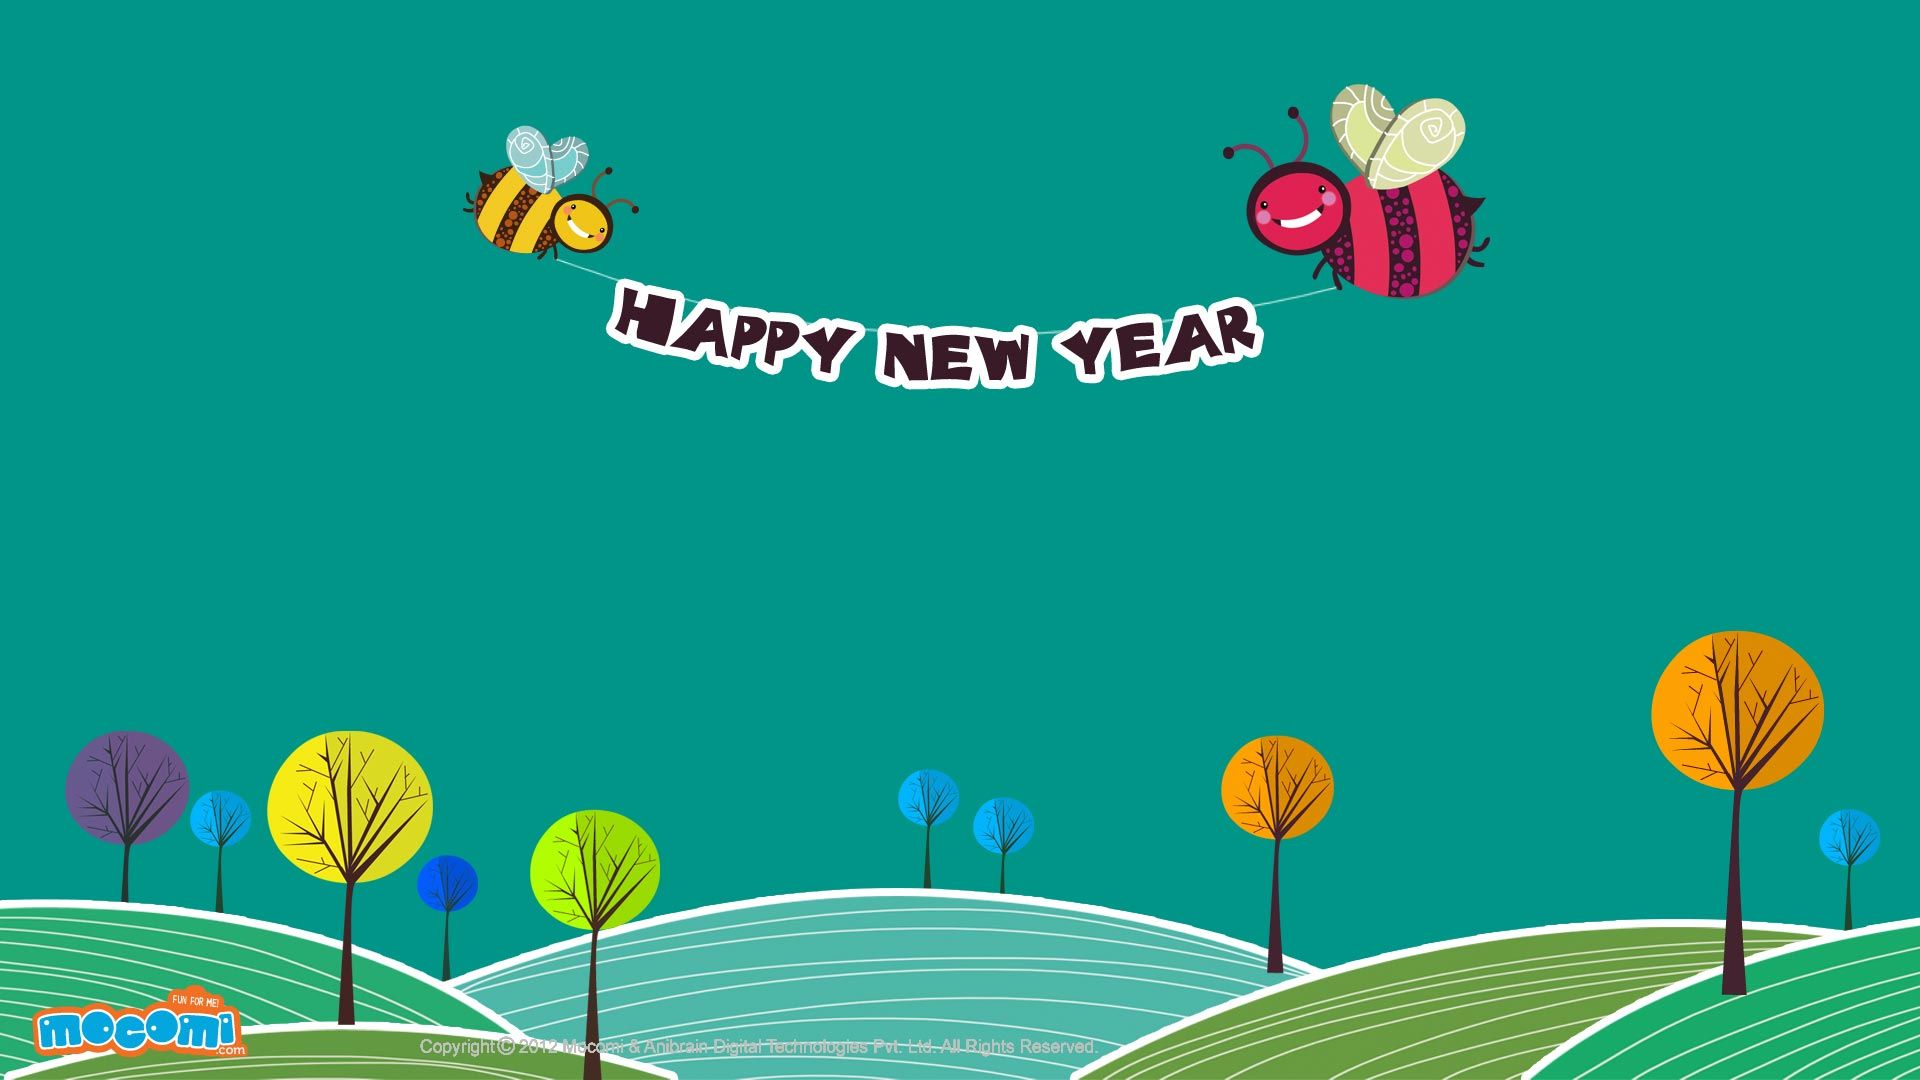 Happy New Year Wallpaper for Kids. Mocomi. Happy new year wallpaper, Kids wallpaper, New year wallpaper